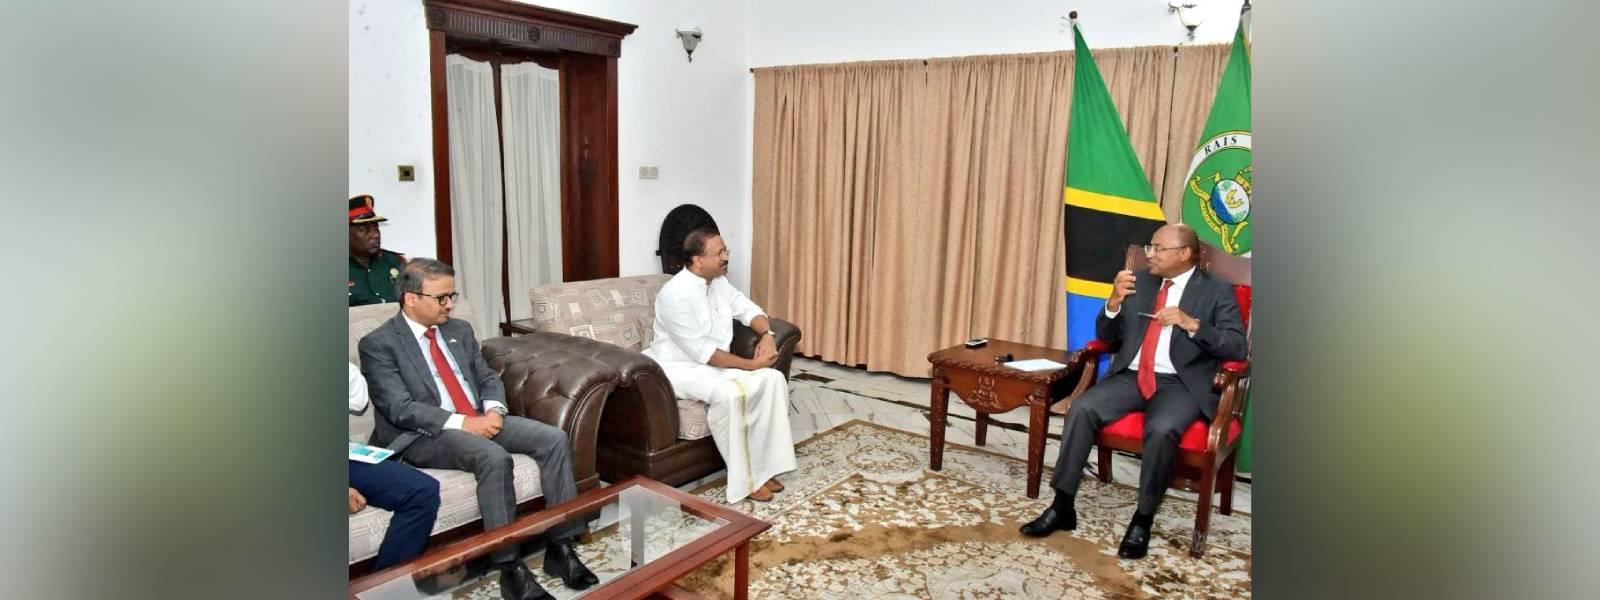 Minister of State for External Affairs Shri V. Muraleedharan met the President of Zanzibar, H.E. Dr. Hussein Ali Mwinyi in Zanzibar